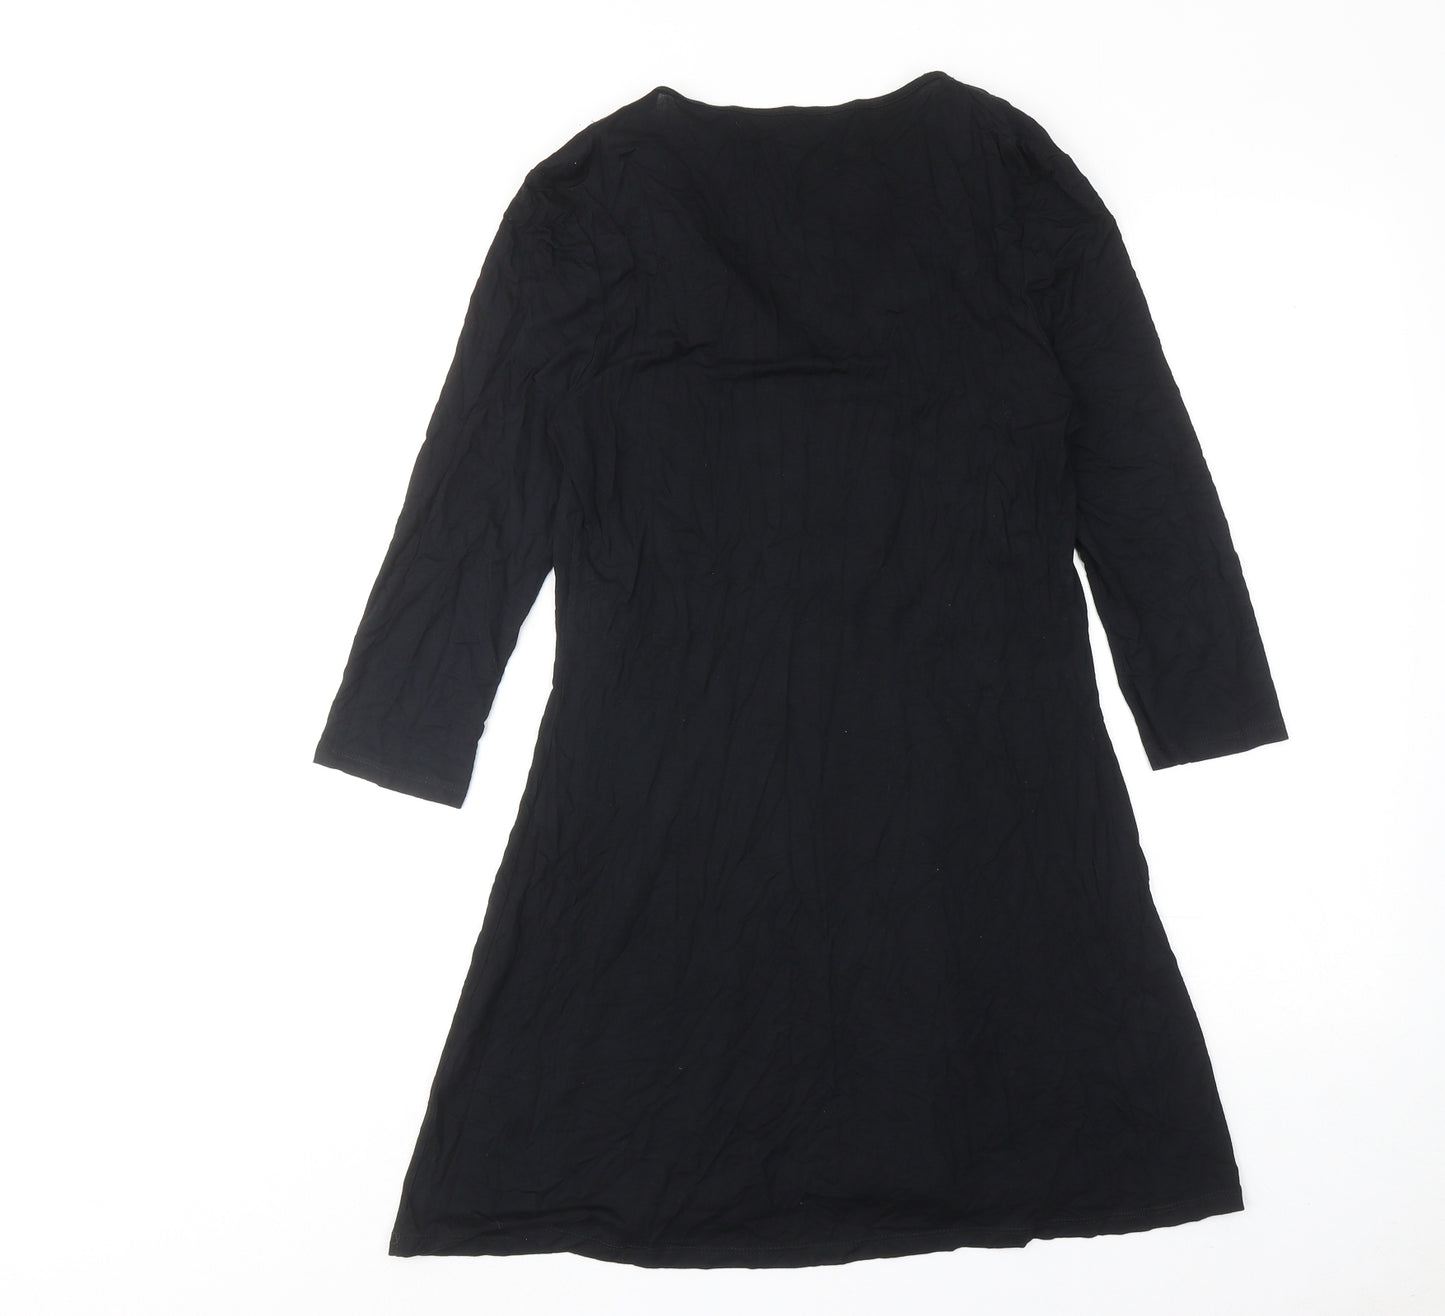 Julien Macdonald Womens Black Viscose A-Line Size 12 V-Neck Pullover